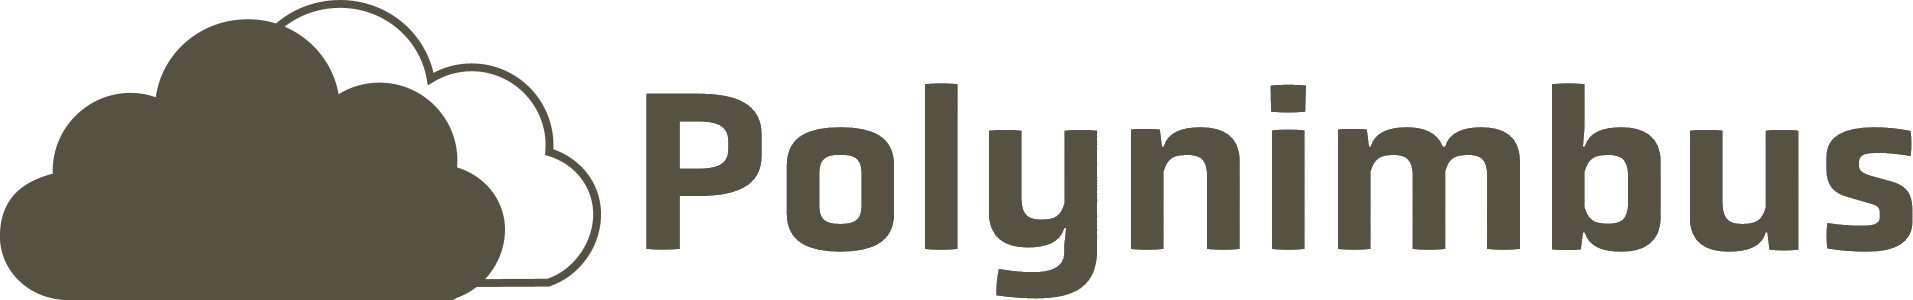 Polynimbus logo